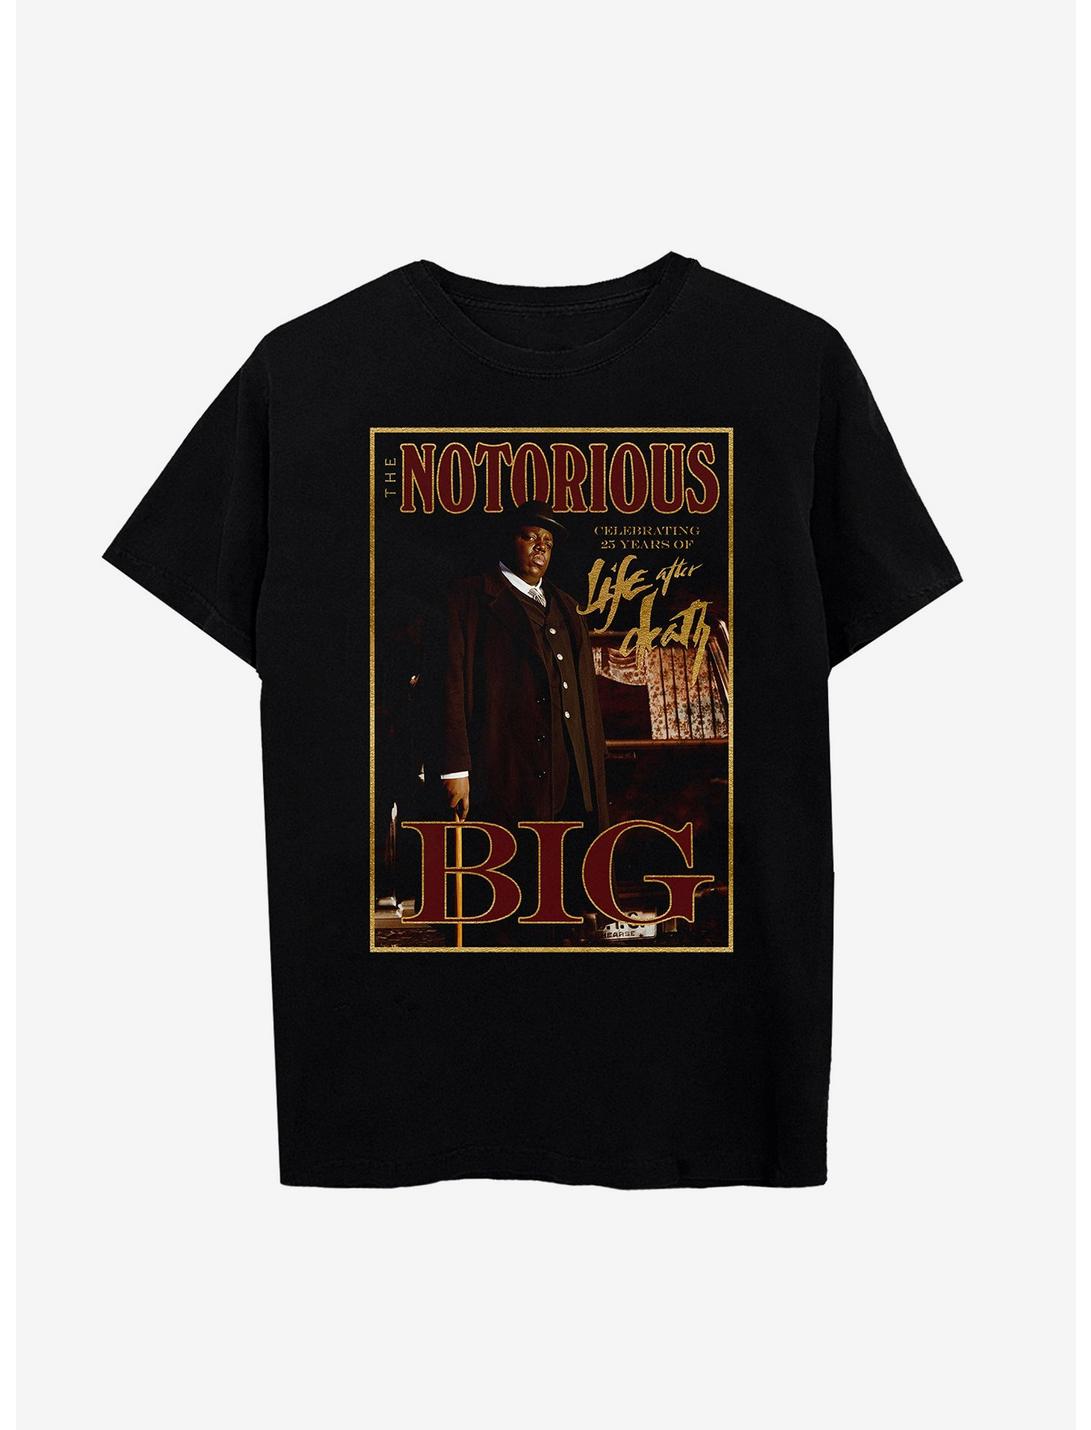 The Notorious B.I.G. Life After Death Anniversary T-Shirt, BLACK, hi-res